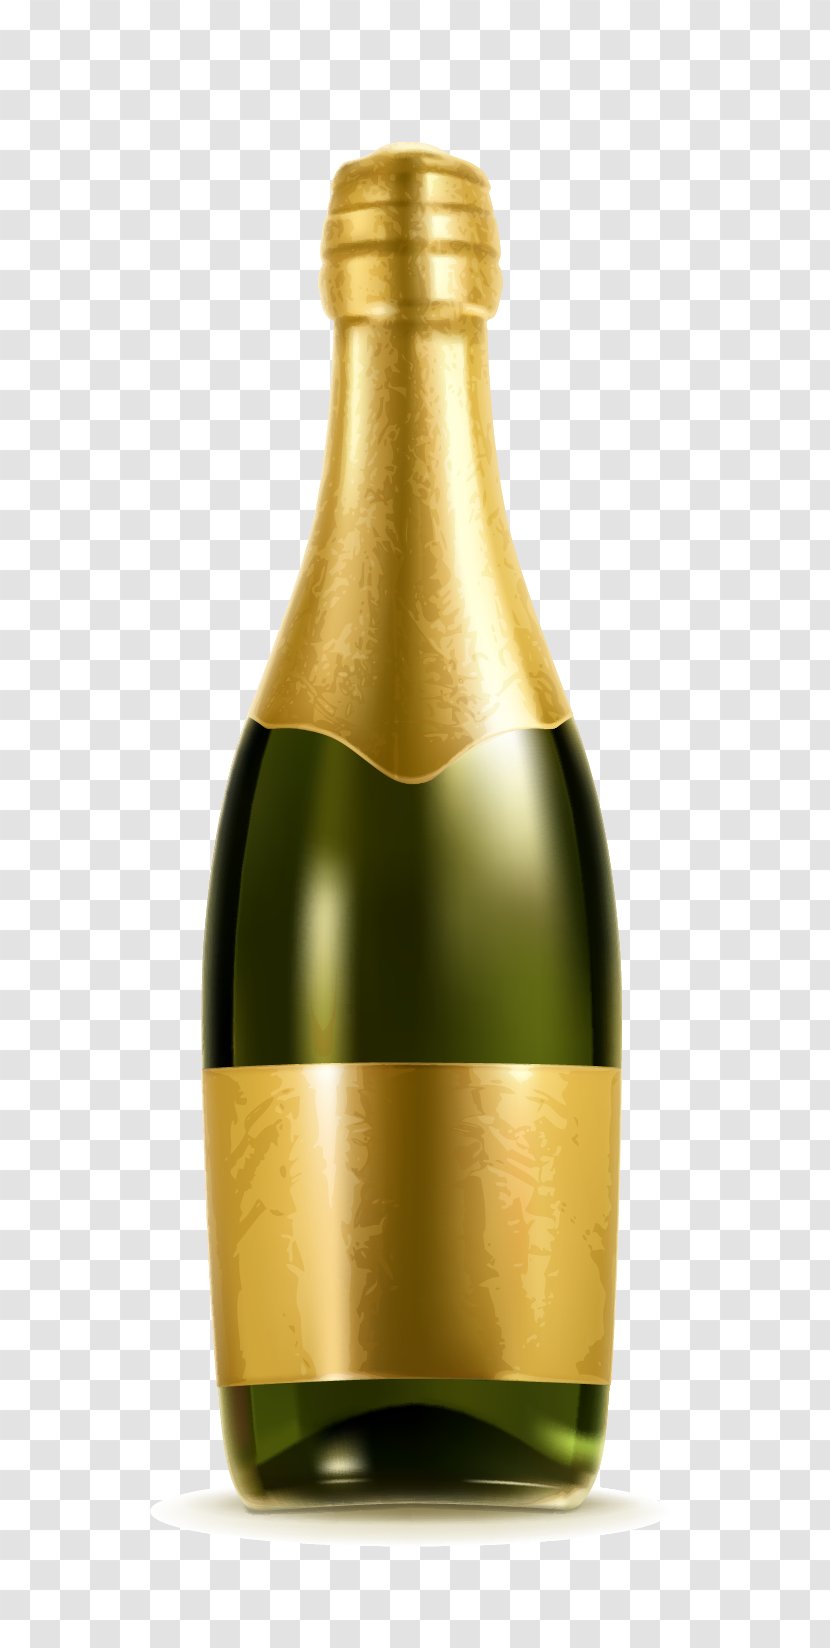 Champagne Bottle Alcoholic Beverage Illustration - Textured Material Vector Transparent PNG